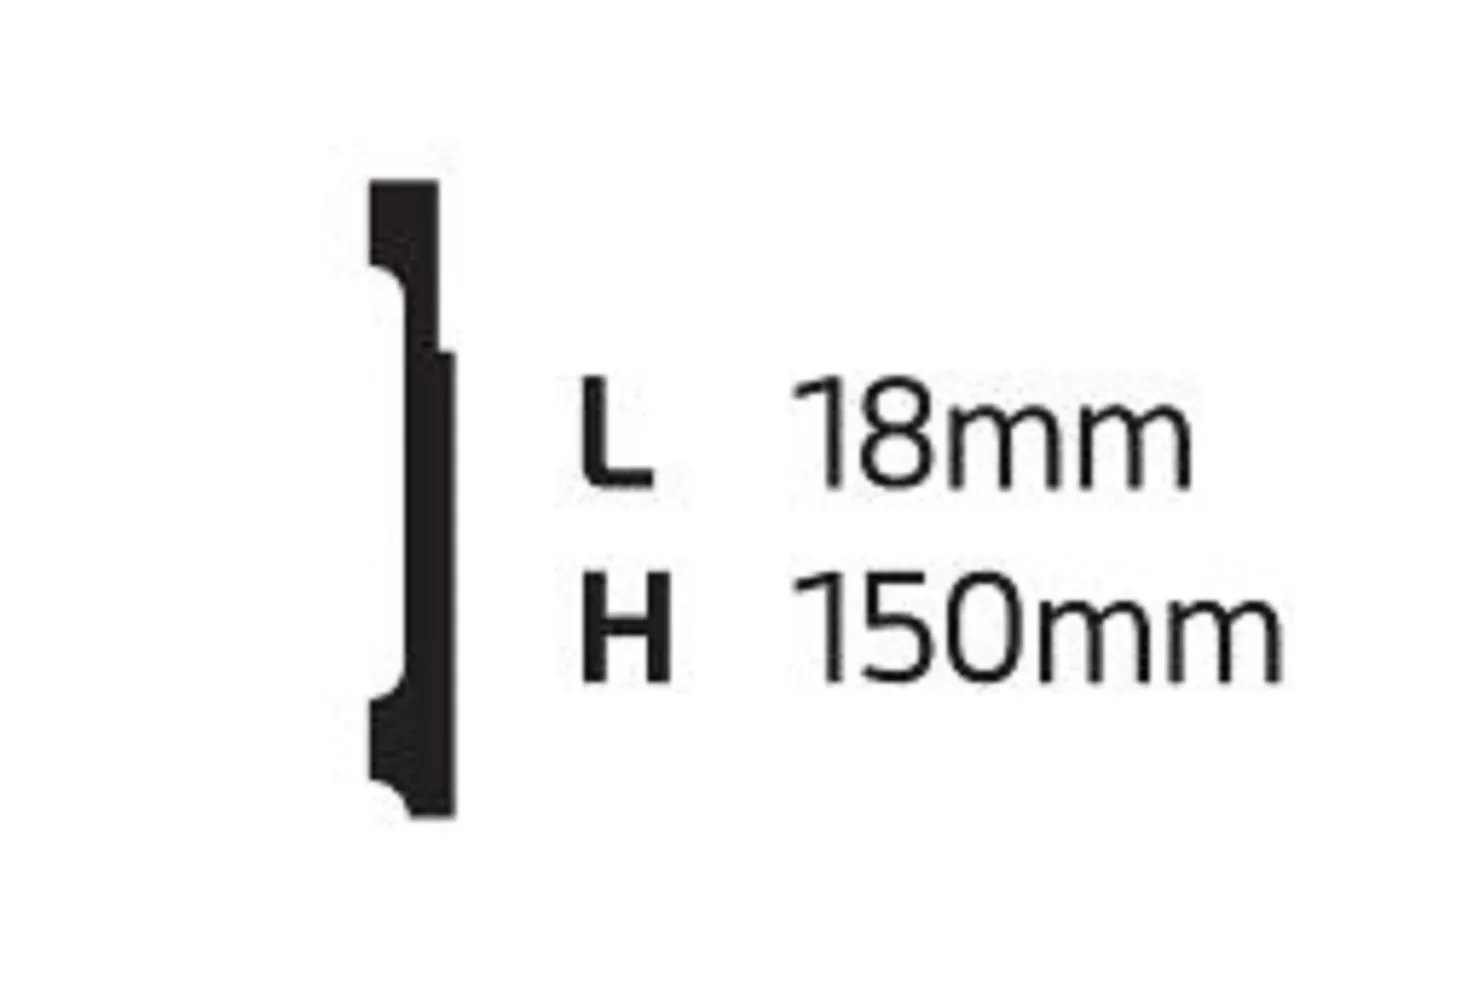 Rodapé de Poliestireno 15cm x 18mm Frisado Metro Linear GB15 GART - 2